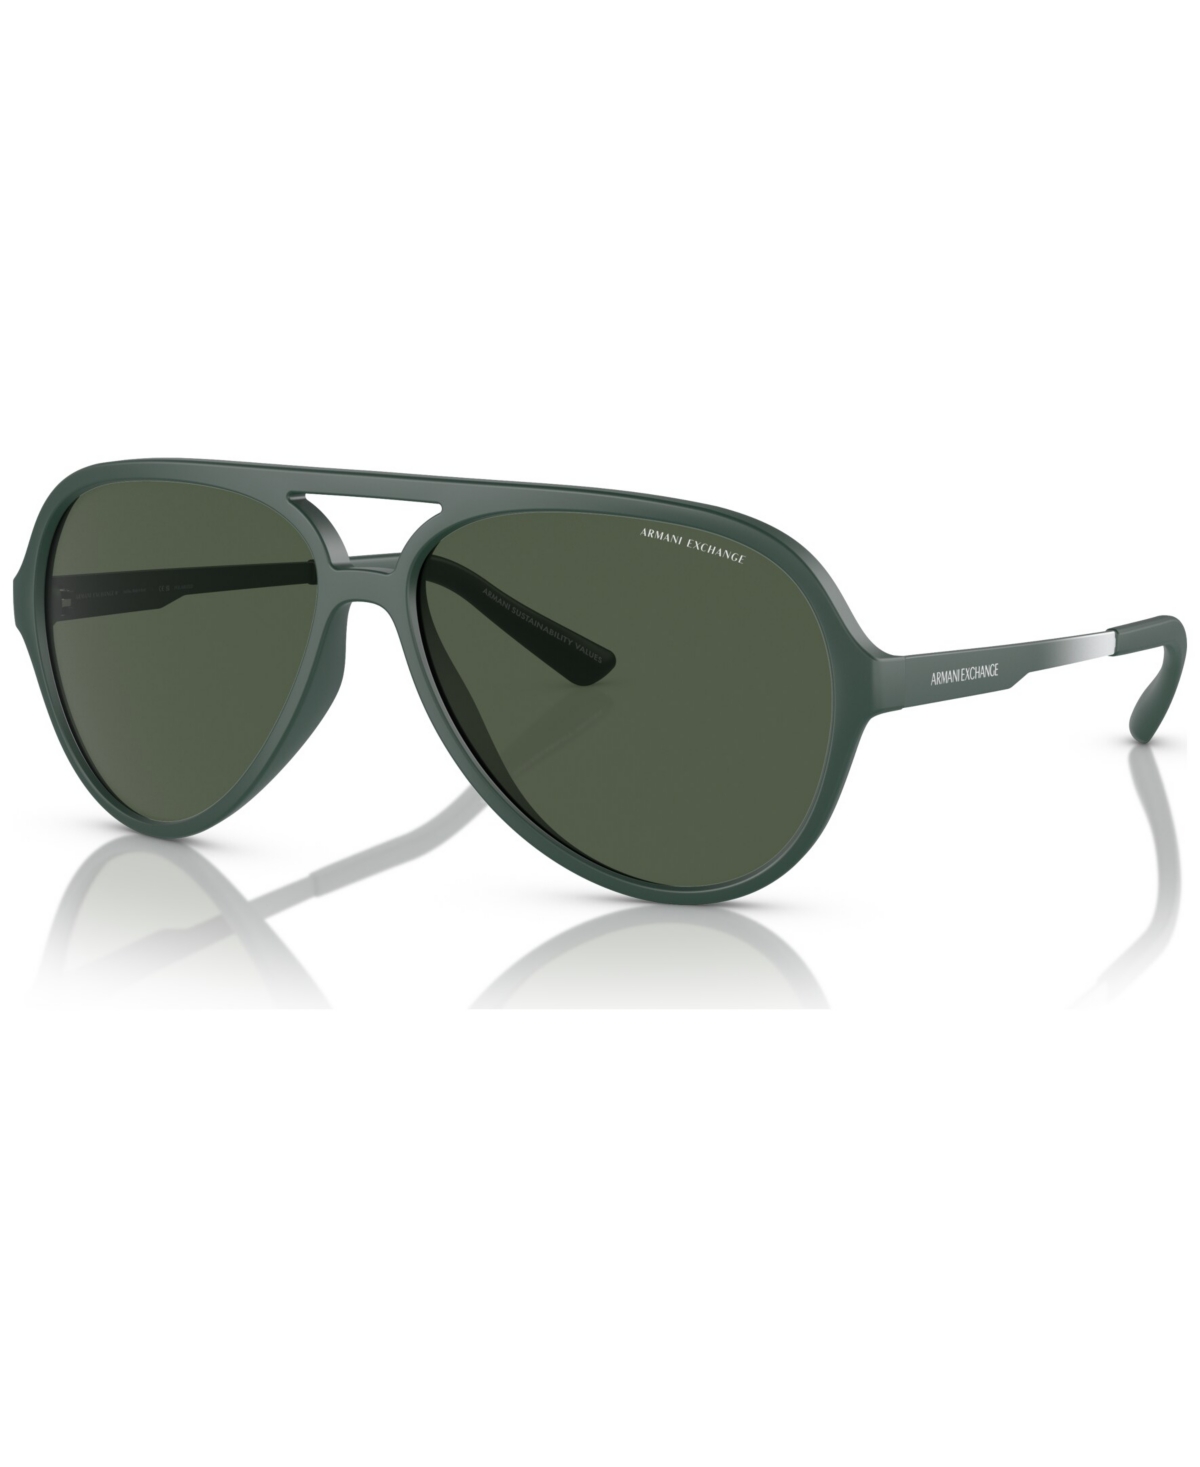 Ax Armani Exchange Men's Polarized Sunglasses, Ax4133s In Black